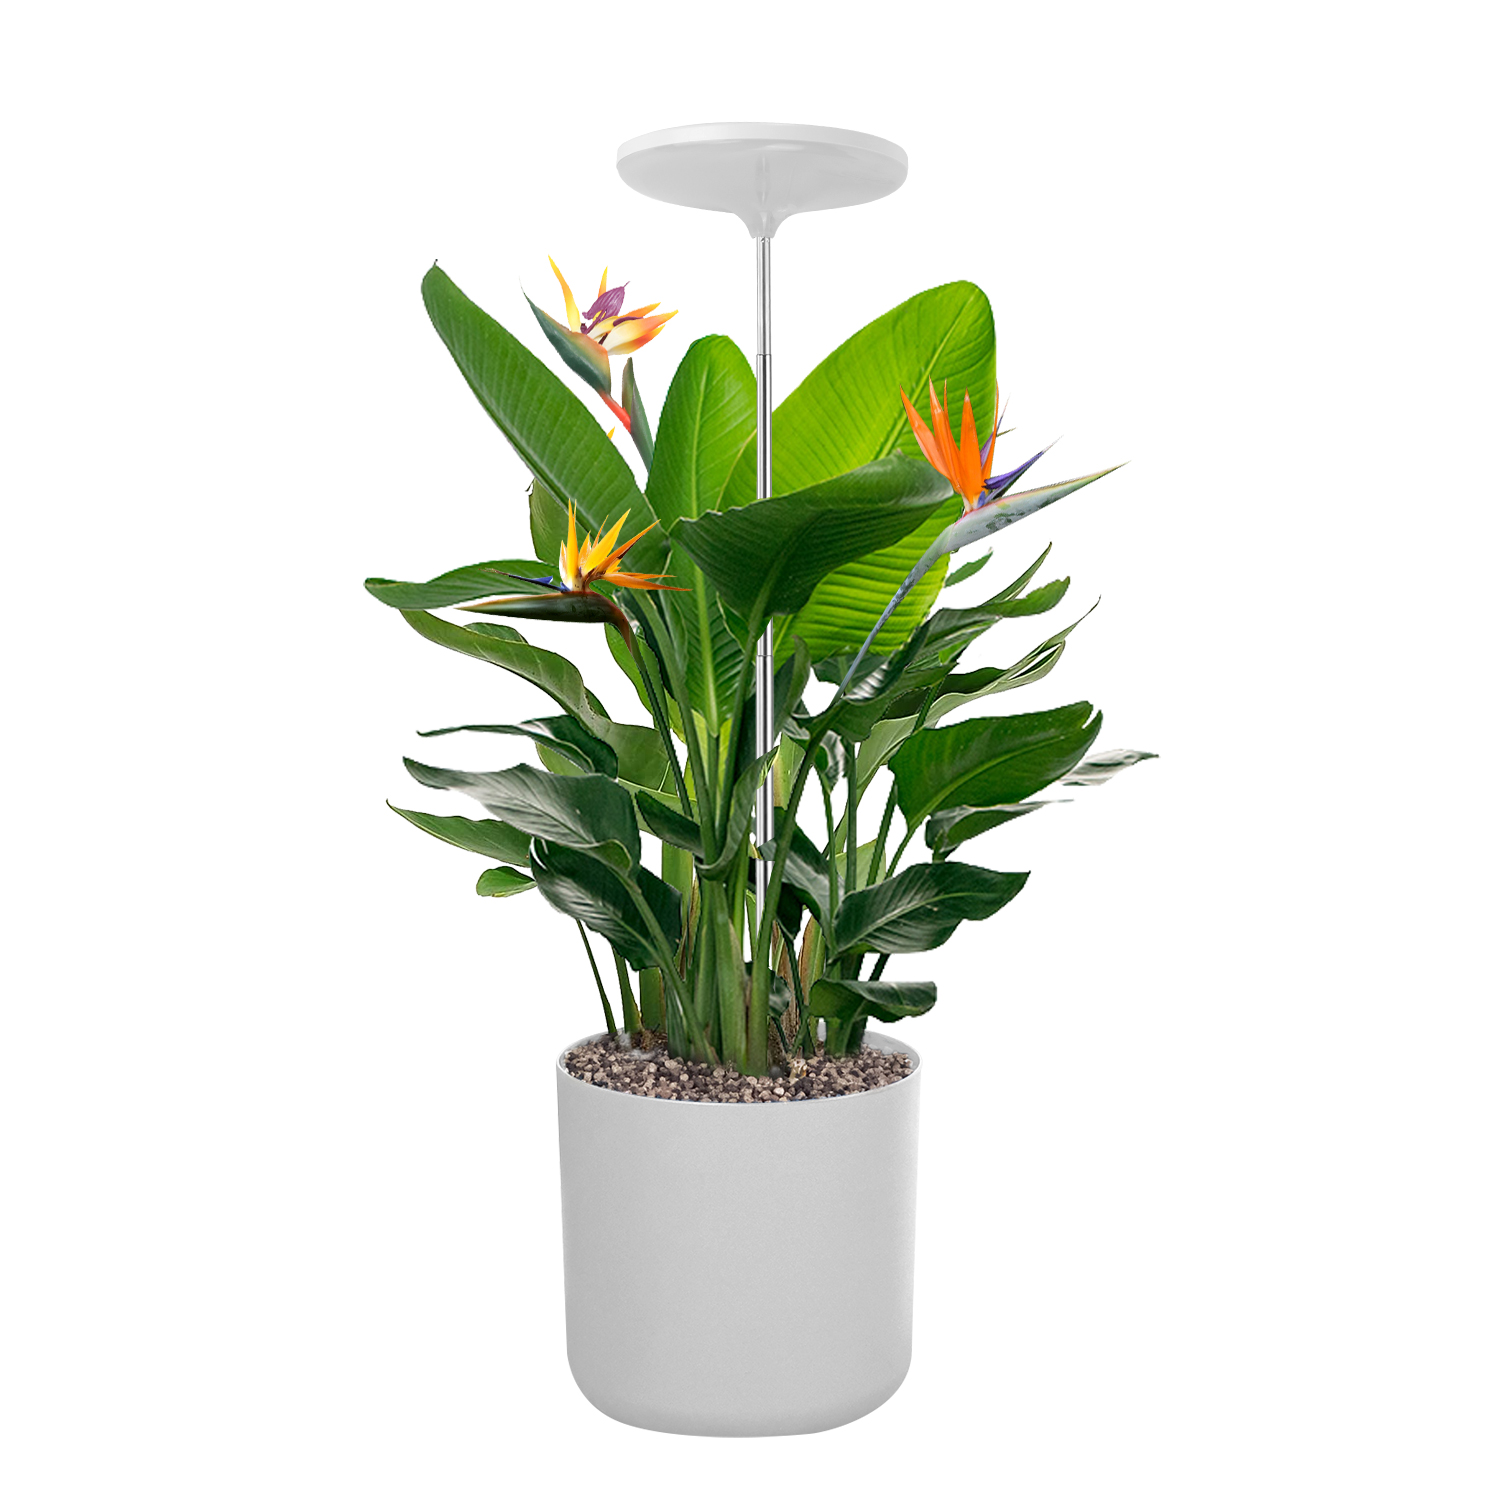 TG004 Indoor Smart Plant Grow Light Lamp Garden, Grow Lights, Decorative Plant Lights